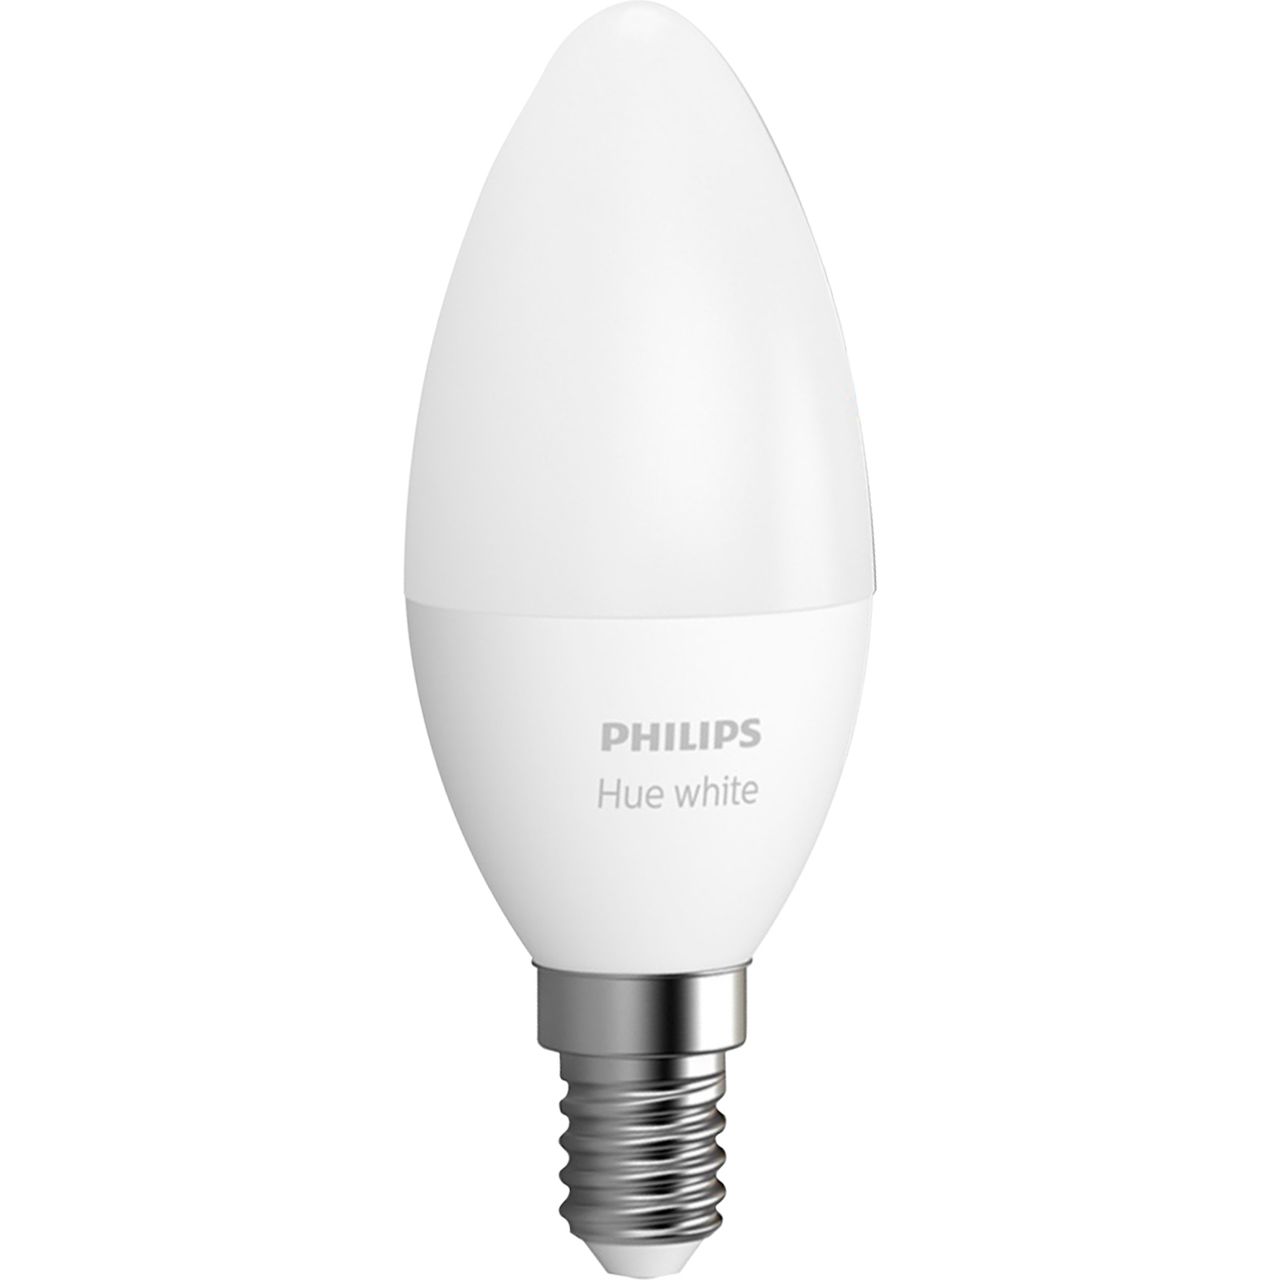 Philips Hue White E14 Review